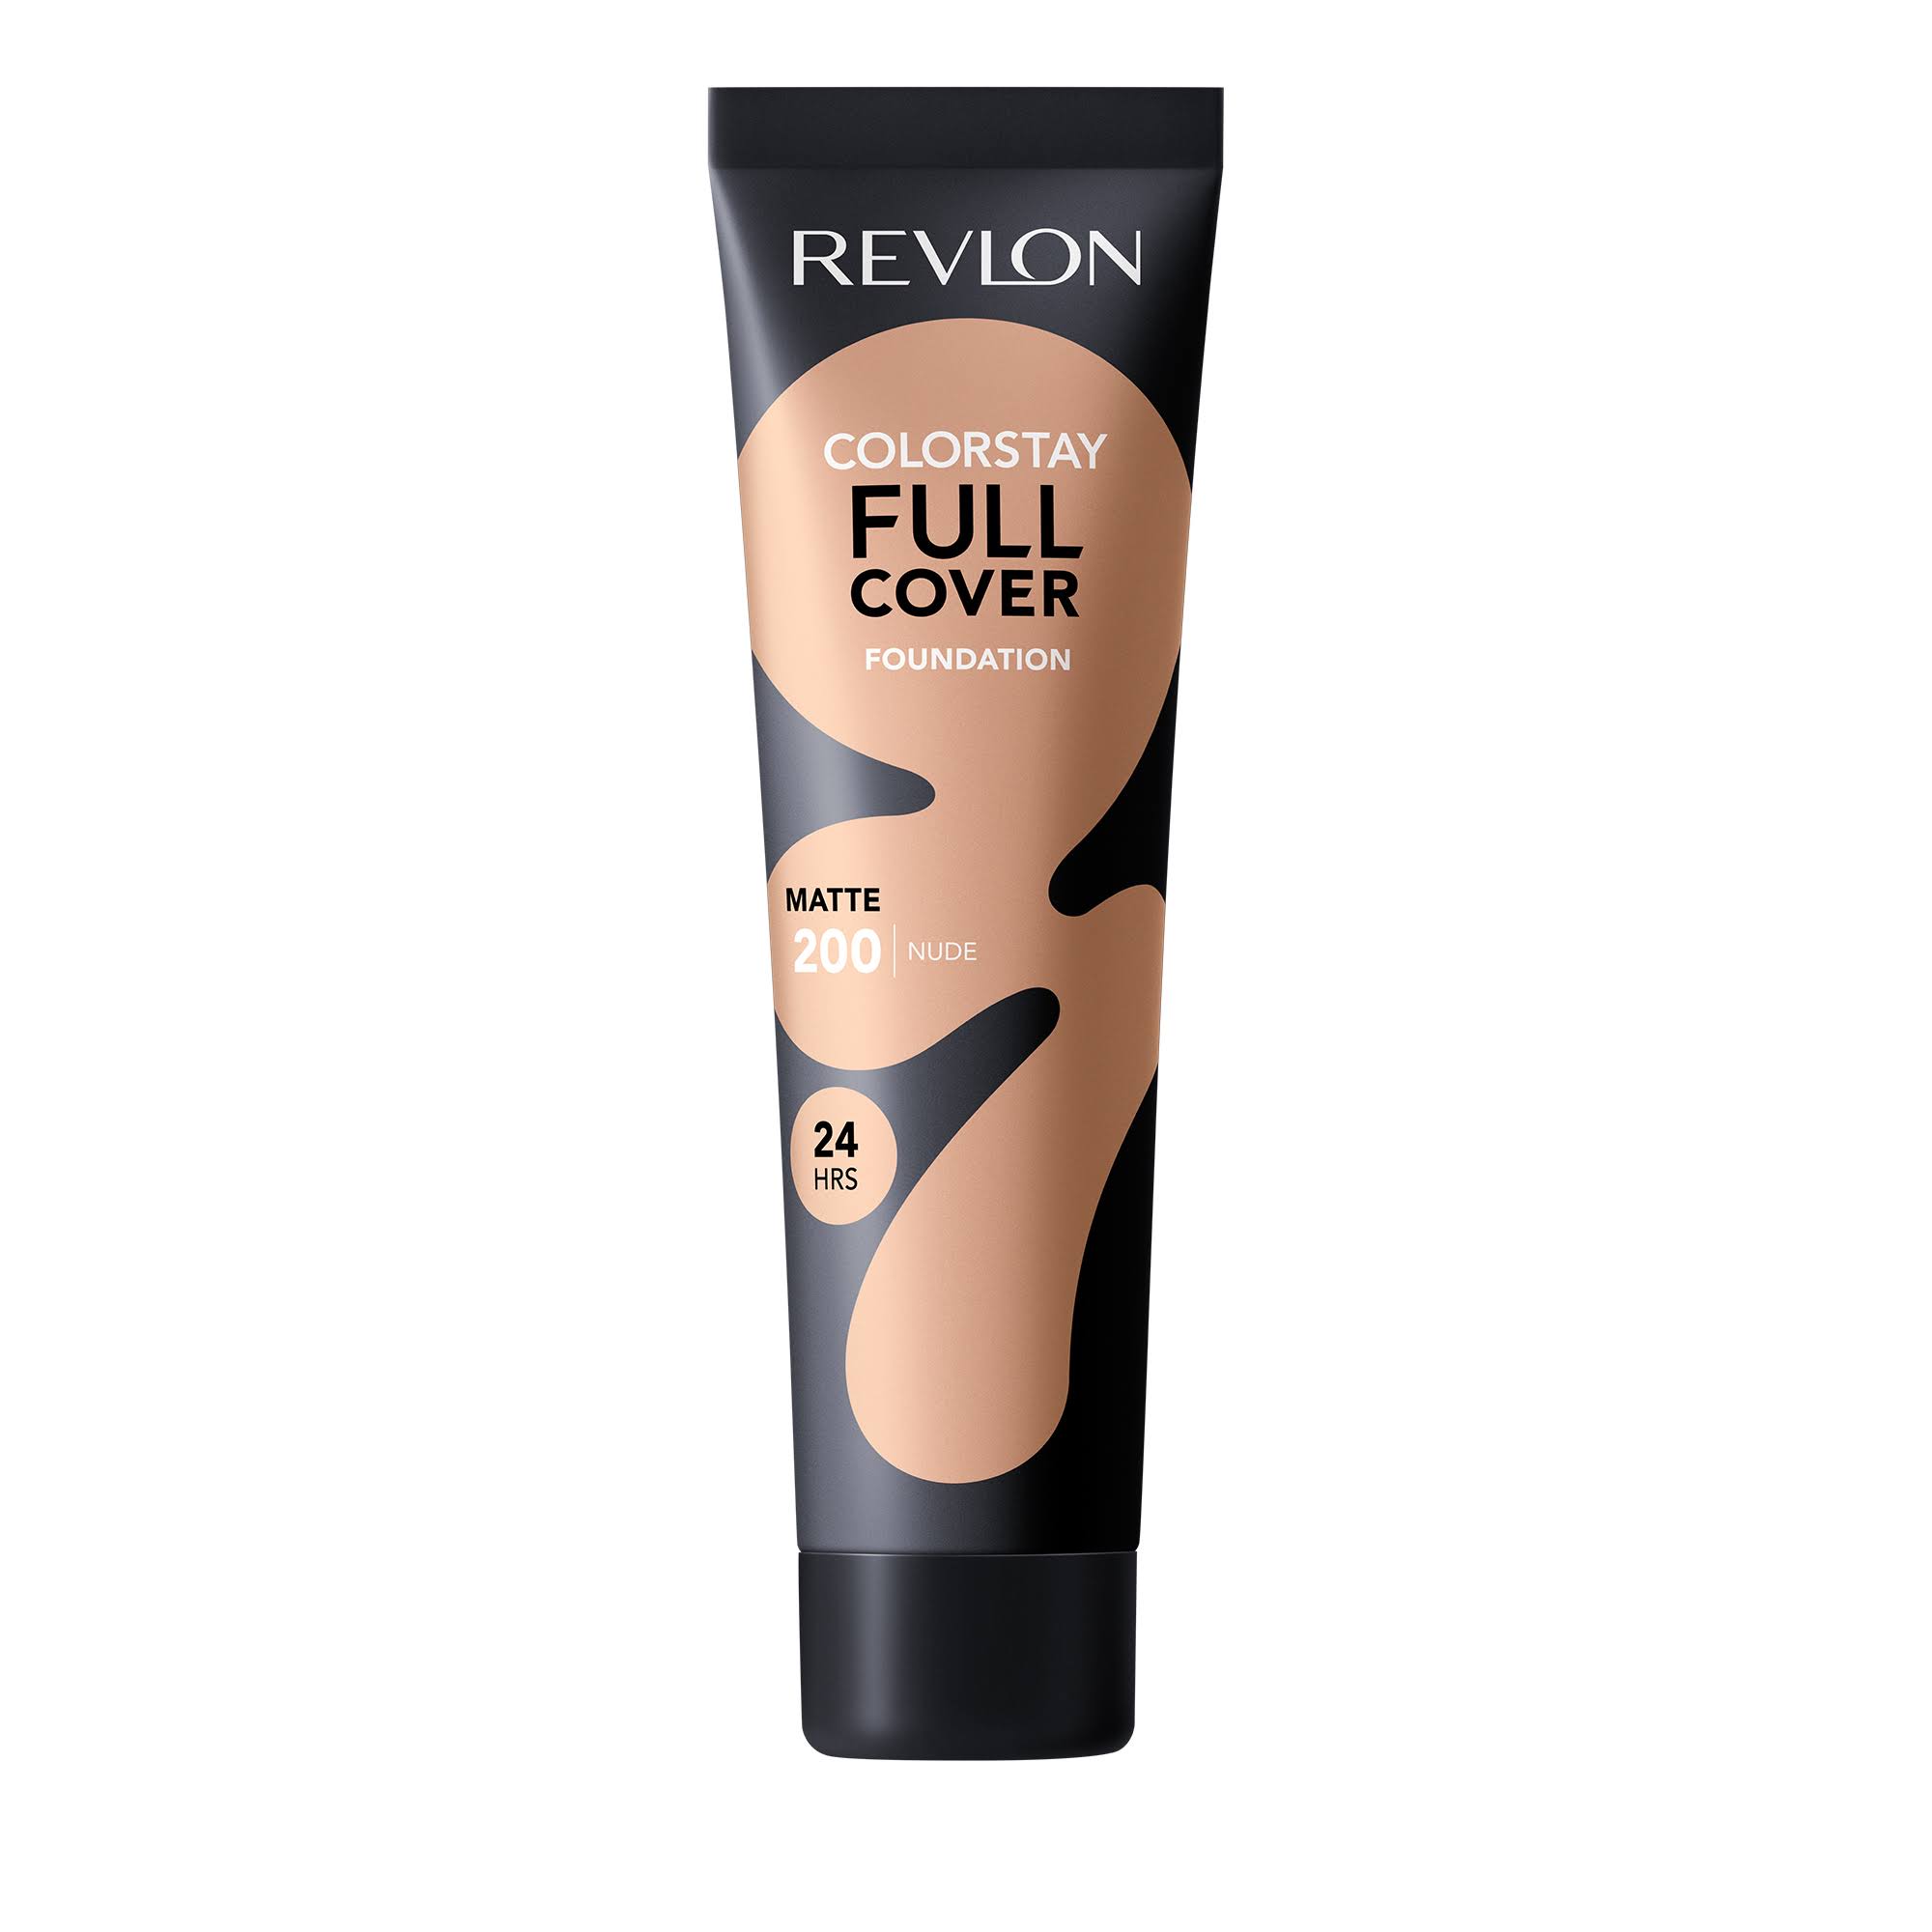 Revlon Colorstay Full Cover Foundation - 200 Nude, 1oz